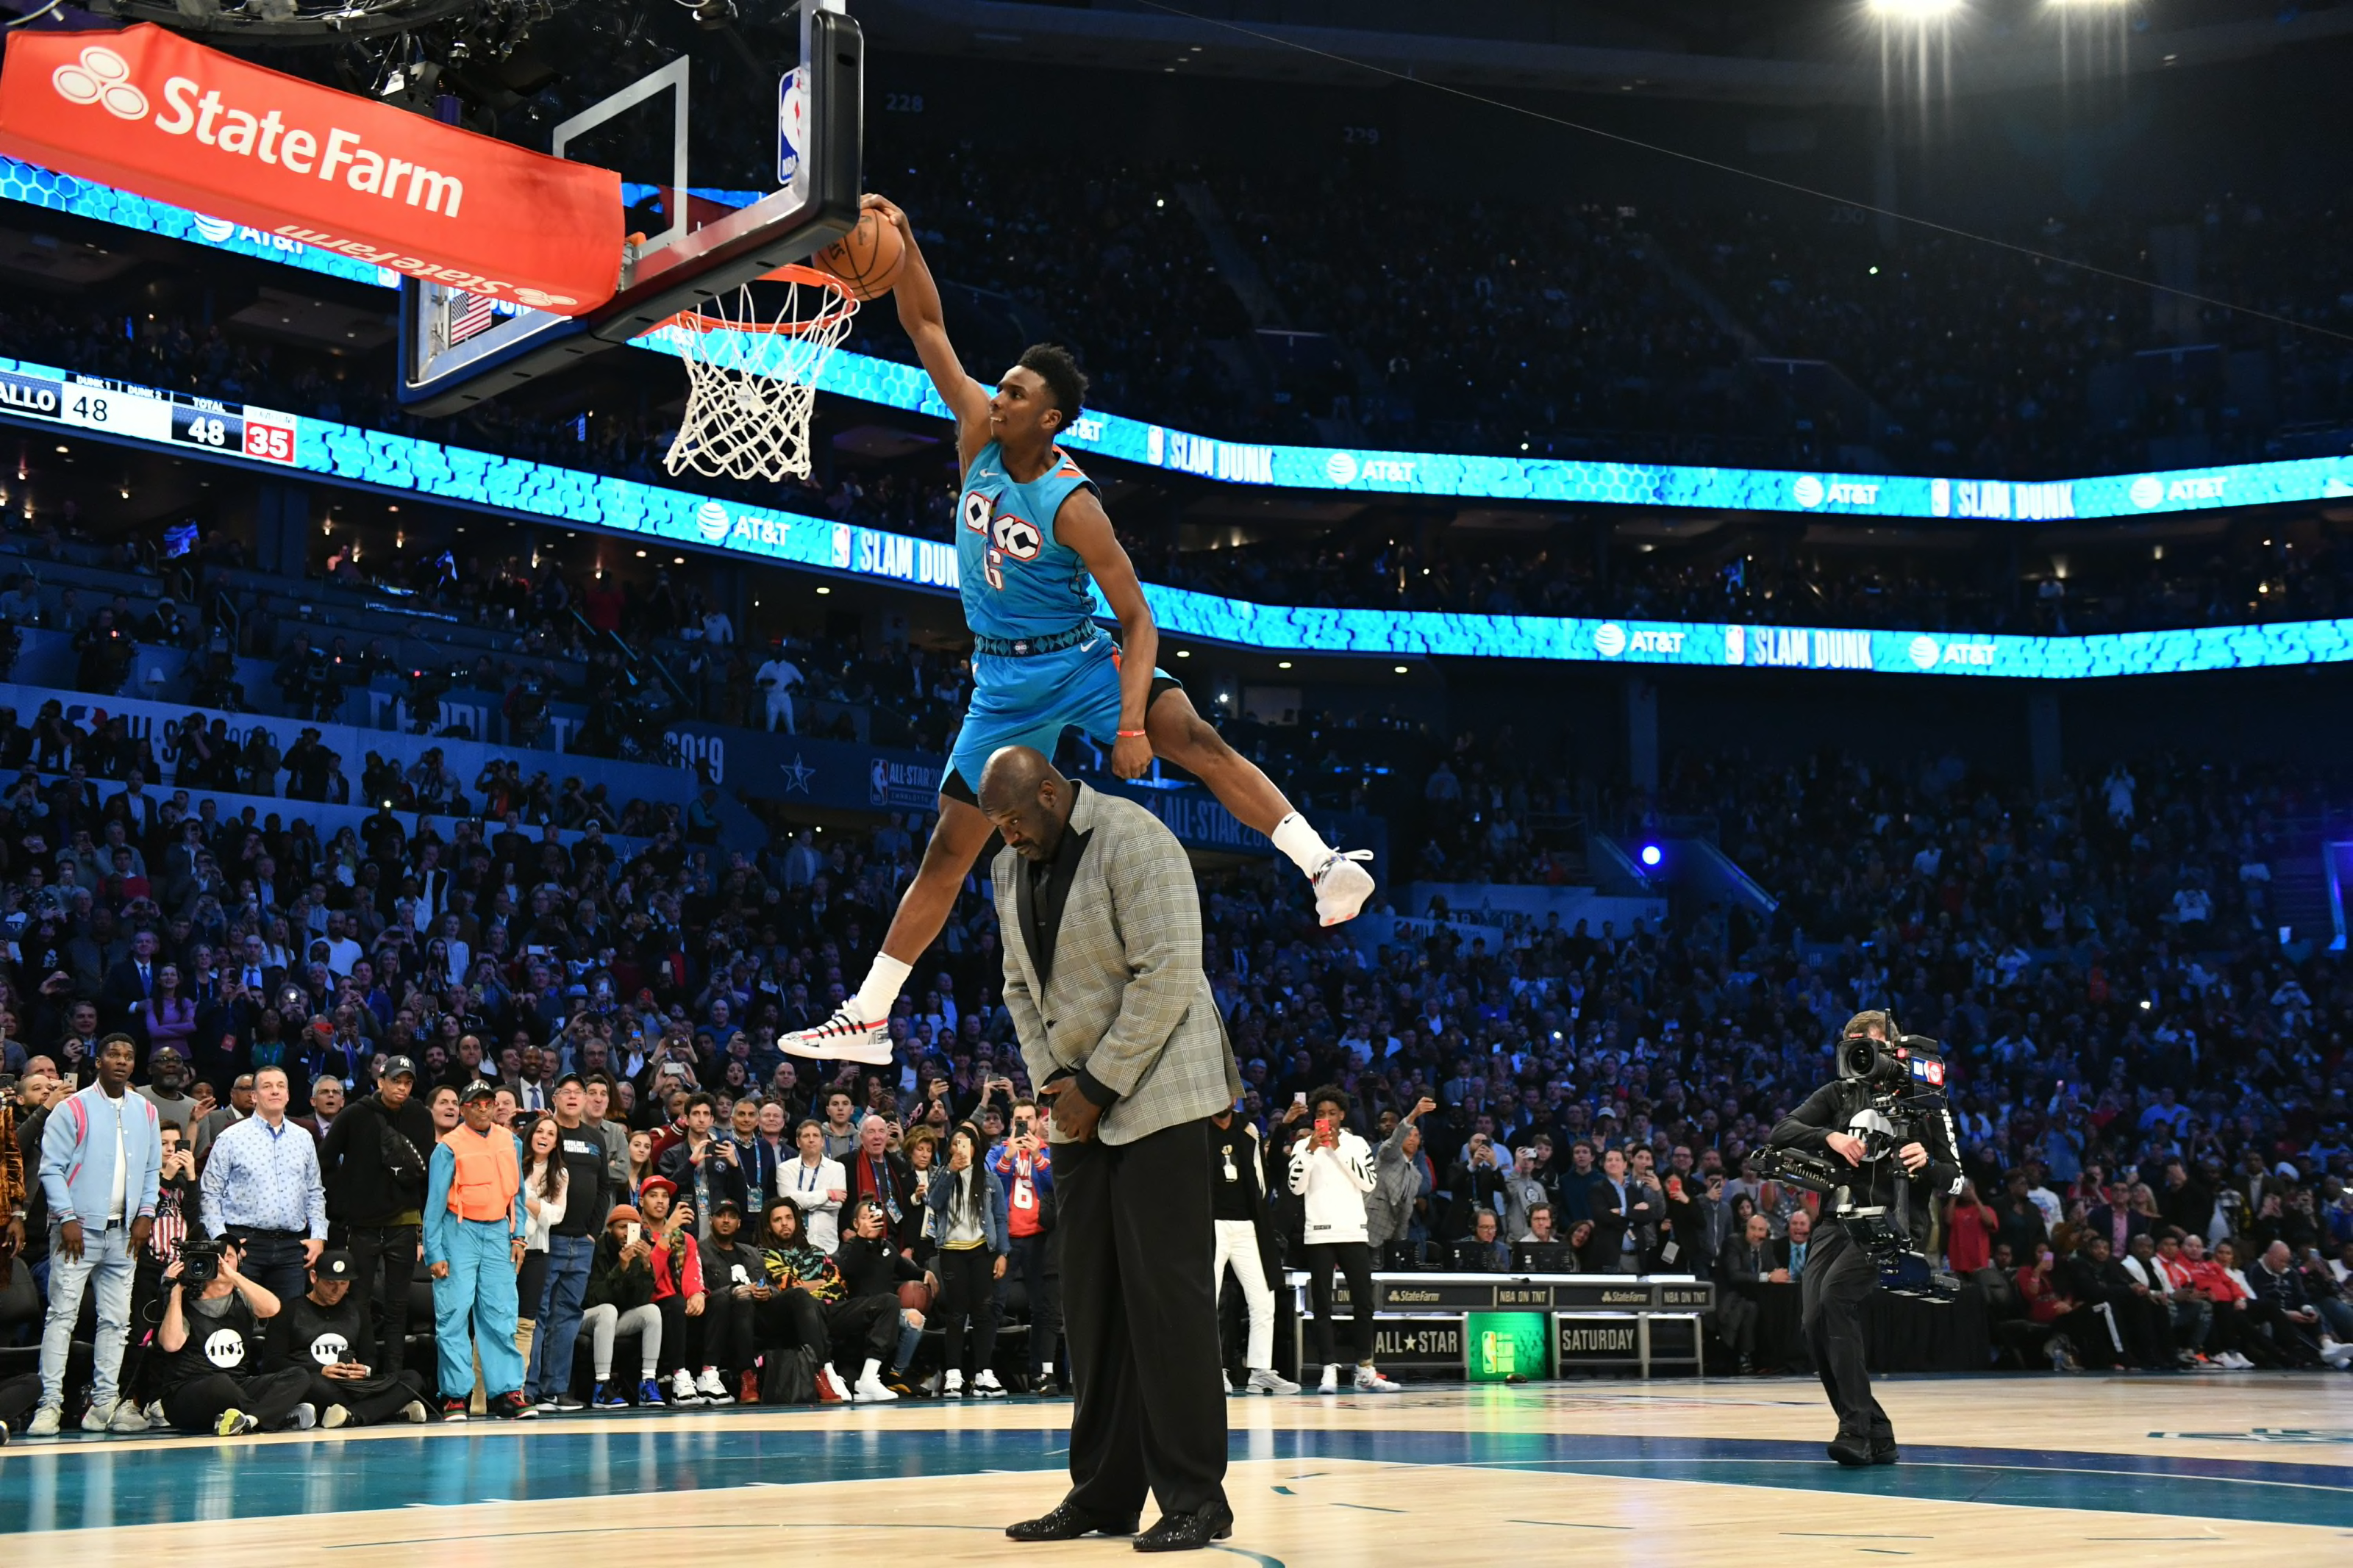 Best dunk photos of 2018-19 NBA season